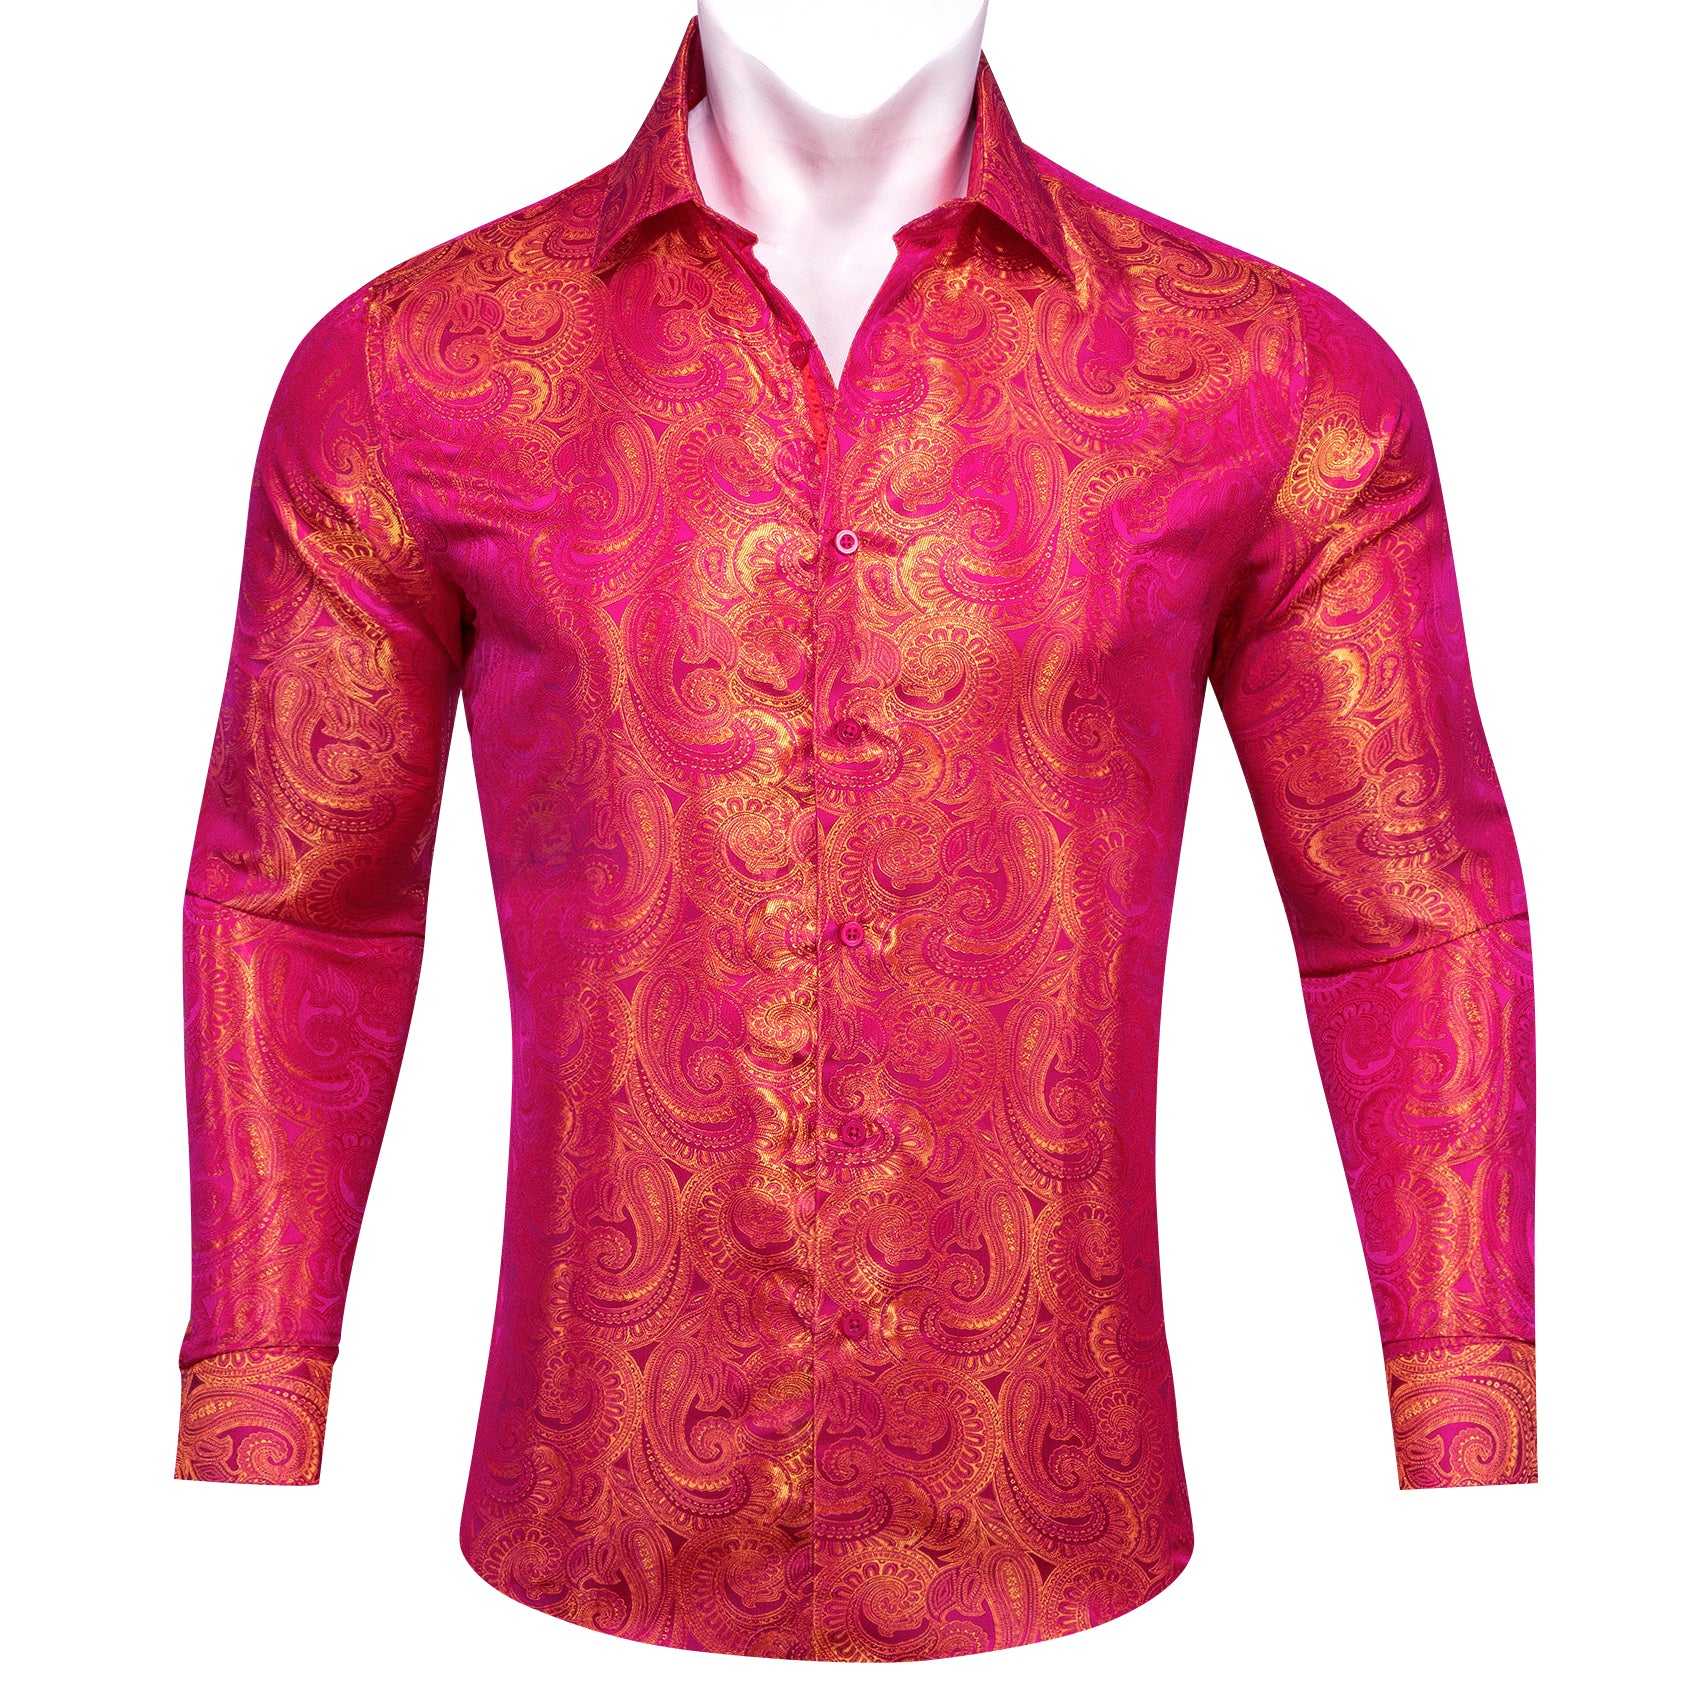 Barry.wang Red Orange Paisley Silk Men's Shirt